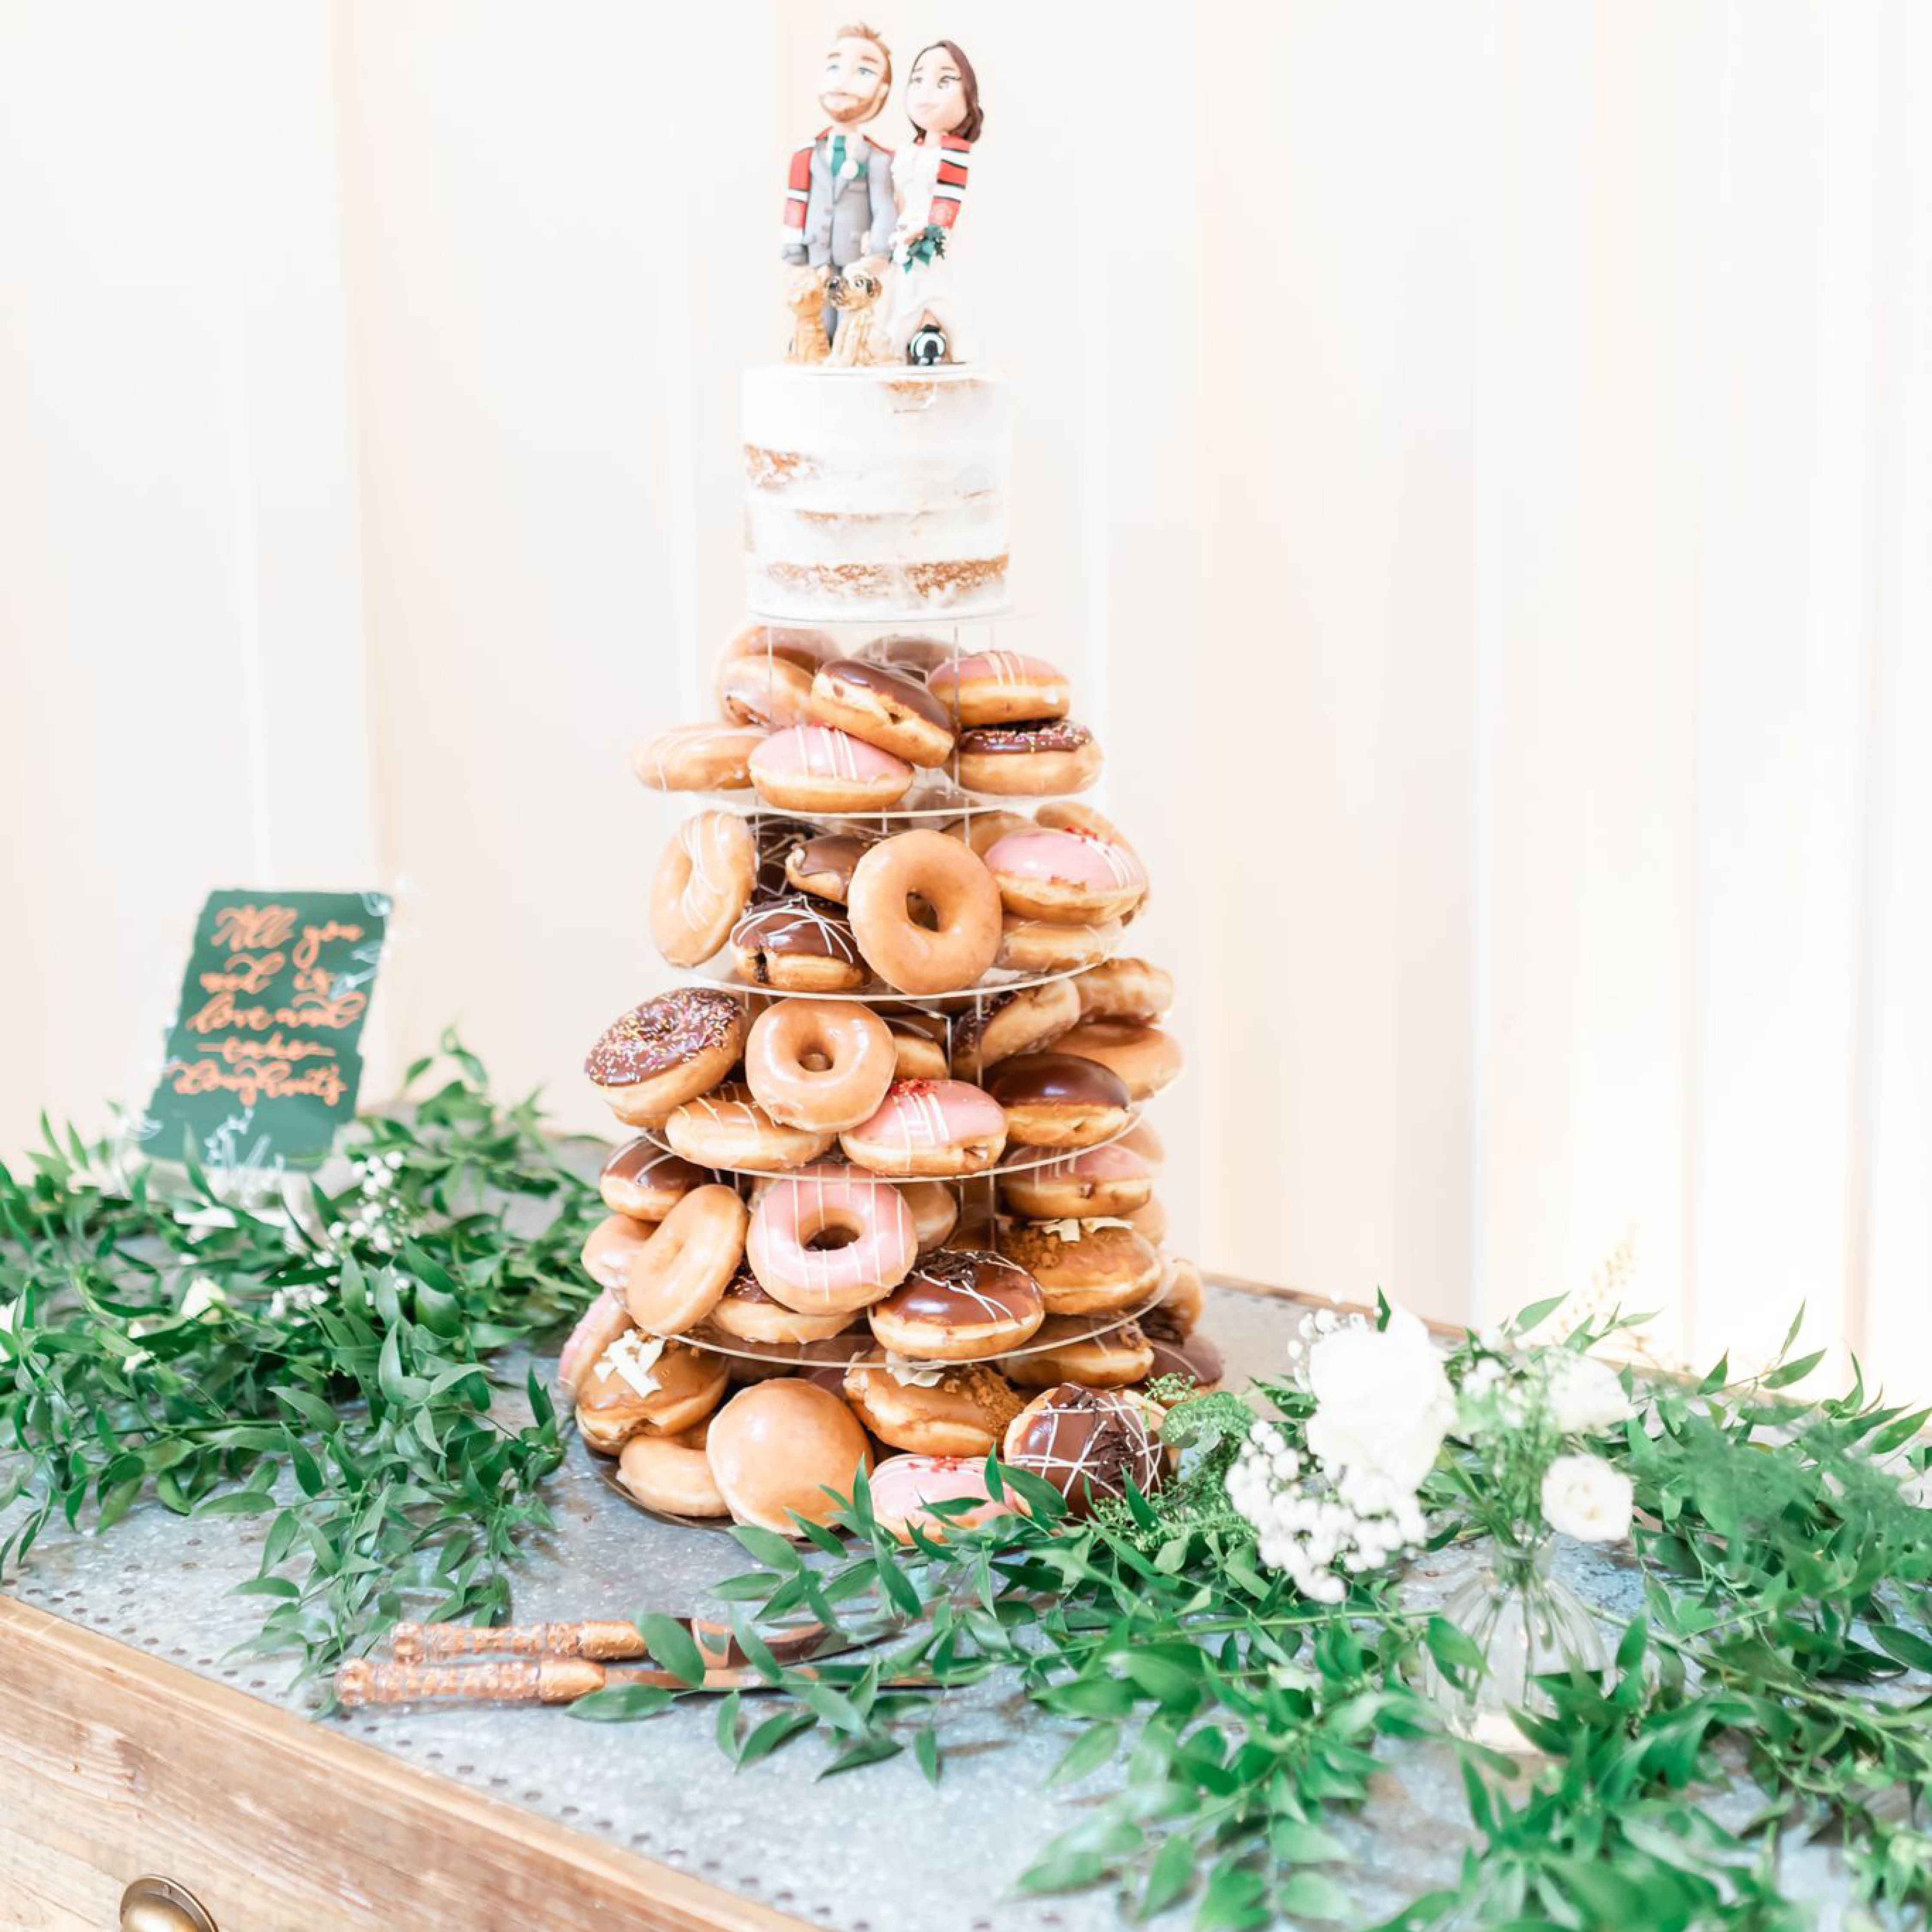 How to choose a Fantastic Wedding Theme, doughnut tower surrey